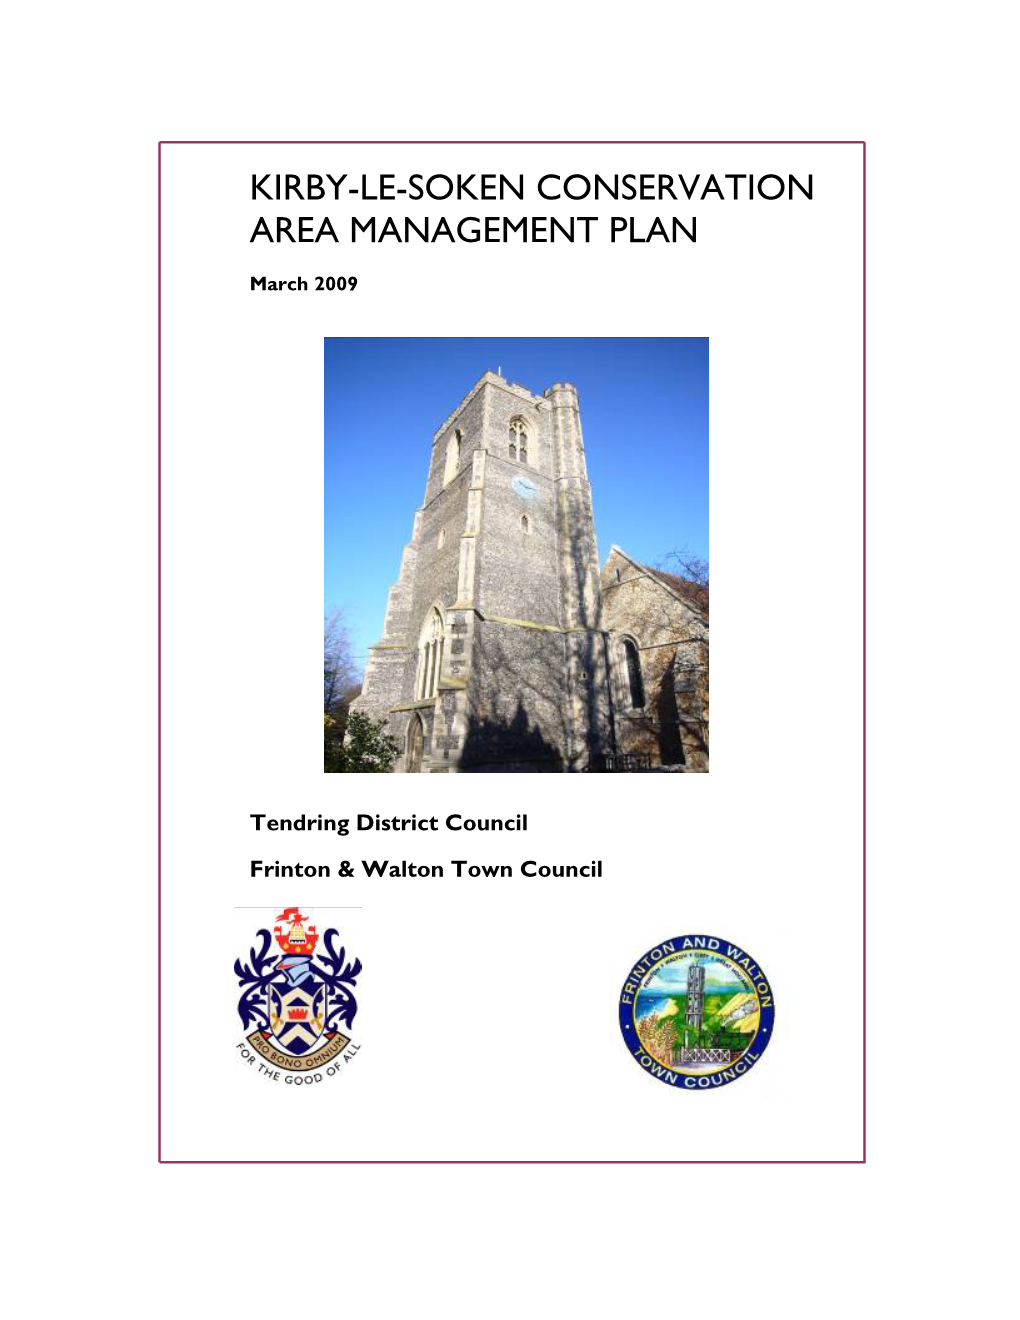 Kirby-Le-Soken Conservation Area Management Plan